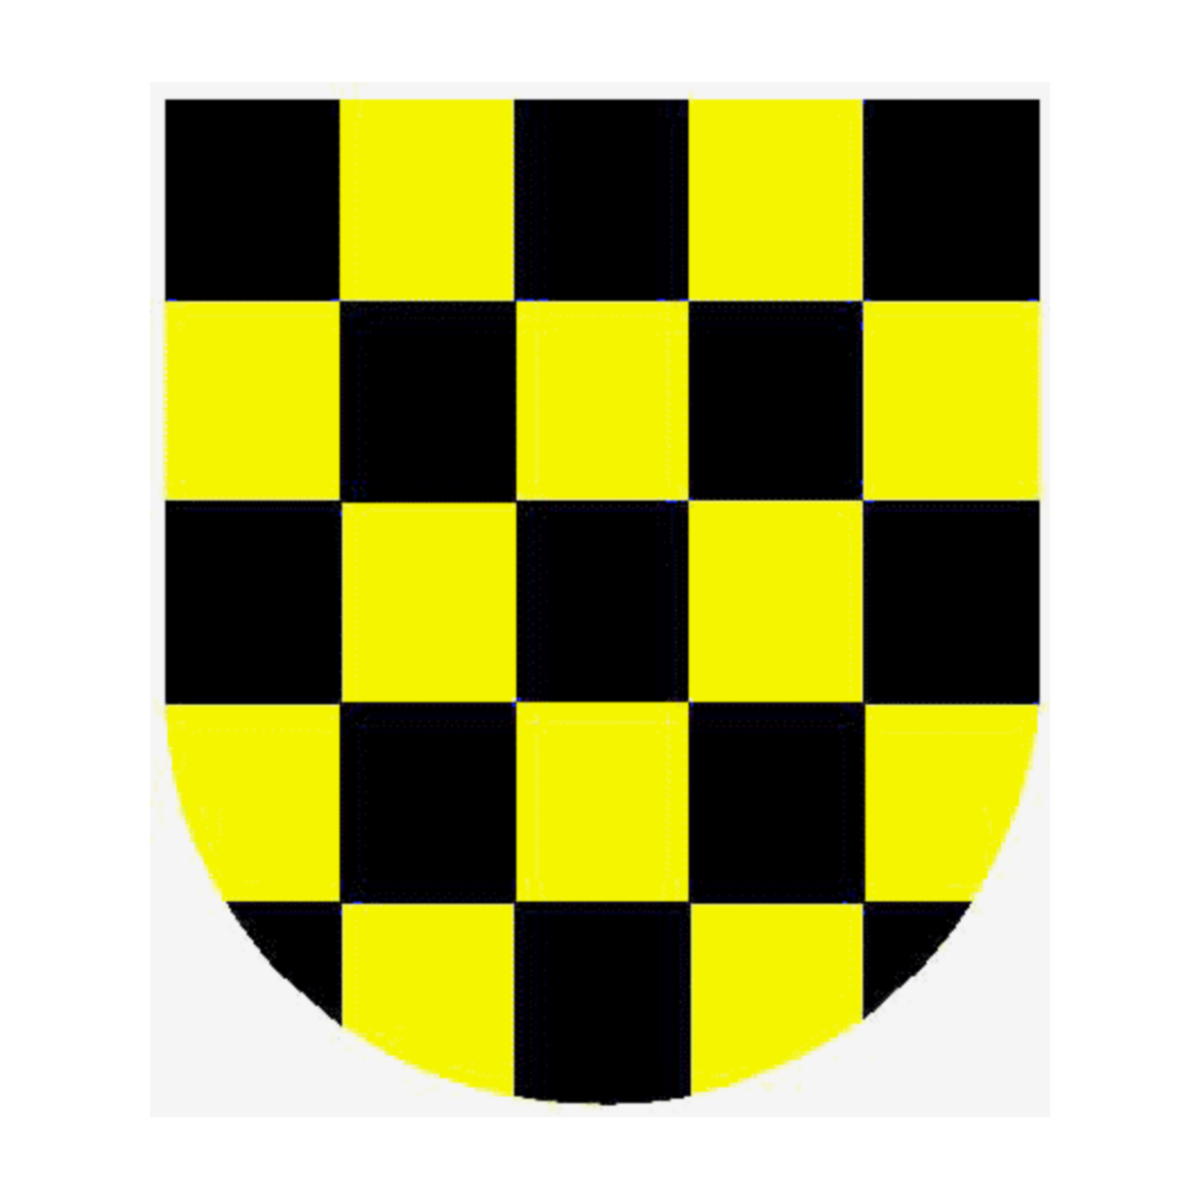 Coat of arms of family Sarraturo